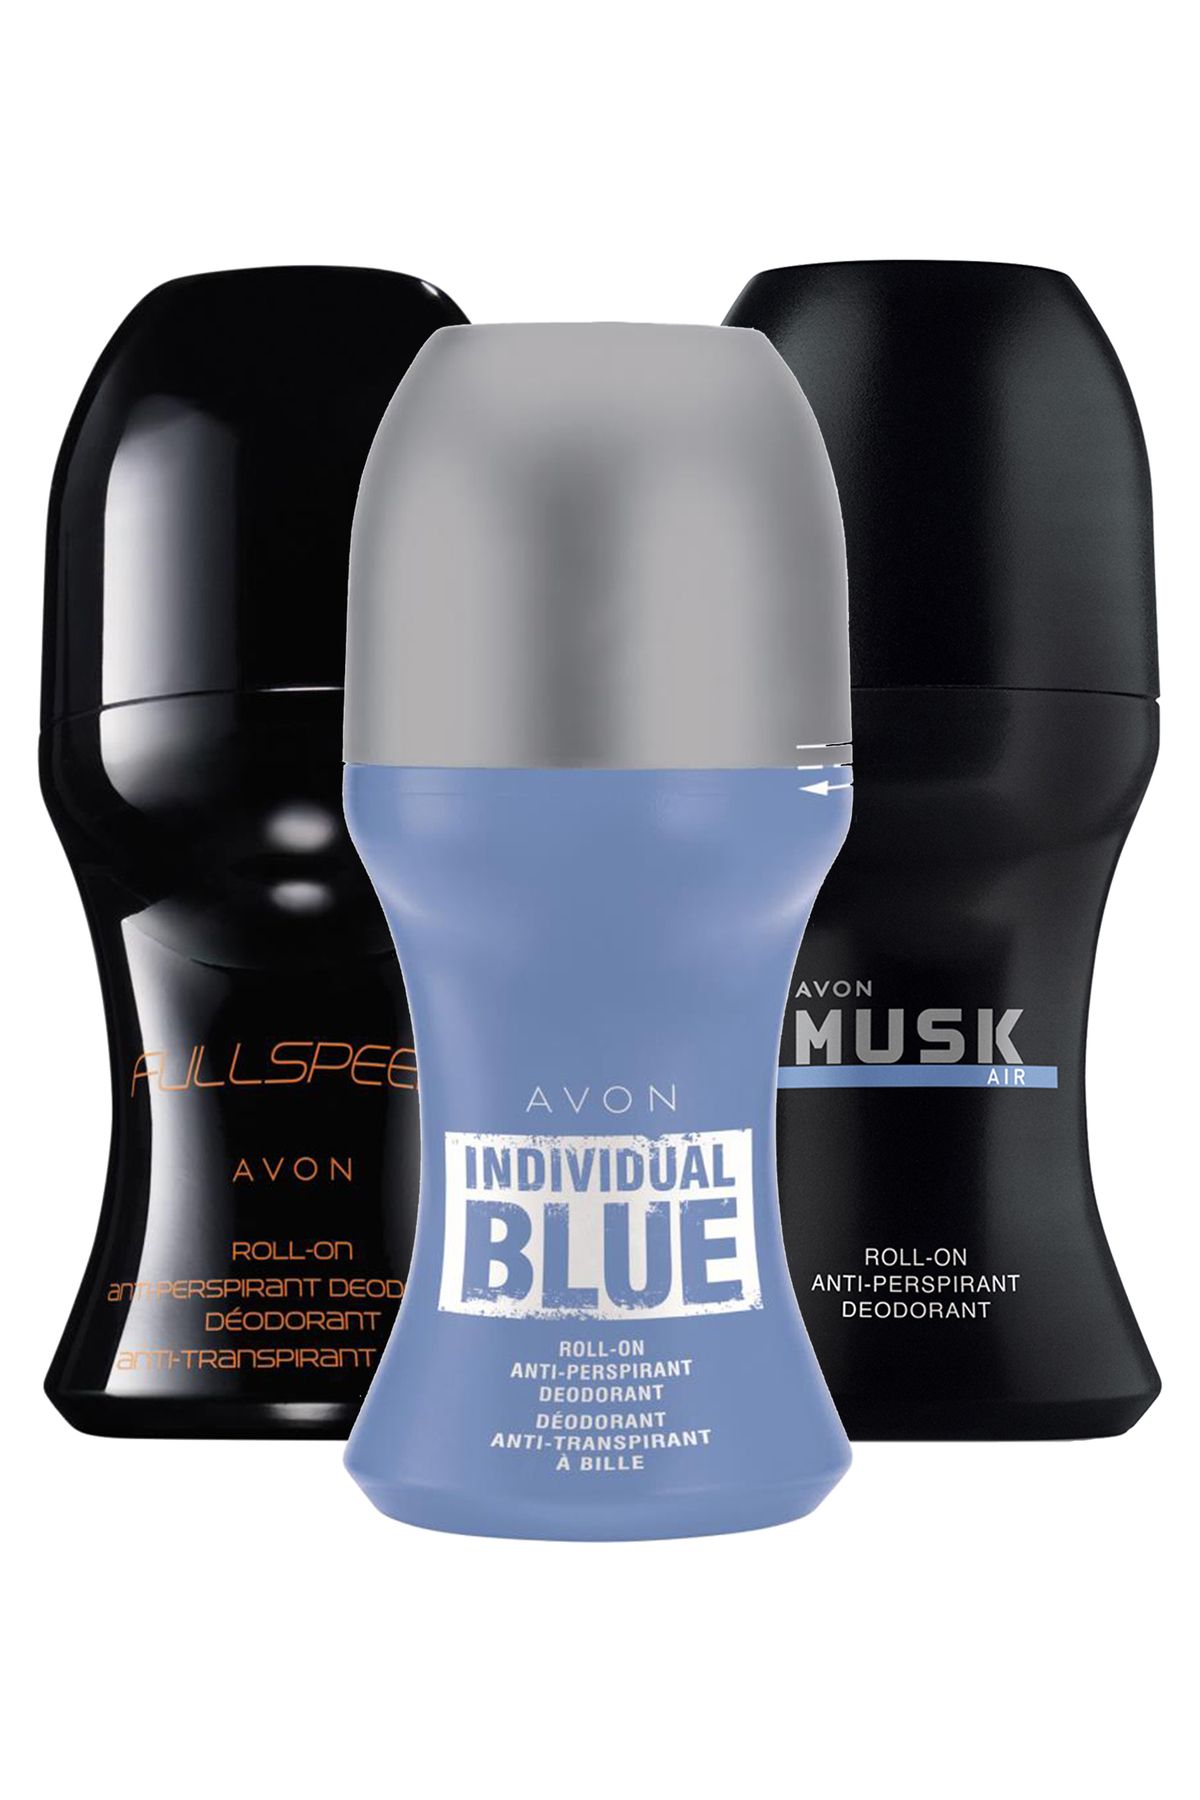 Avon Full Speed, Individual Blue ve Musk Air Üçlü Erkek Rollon Paketi